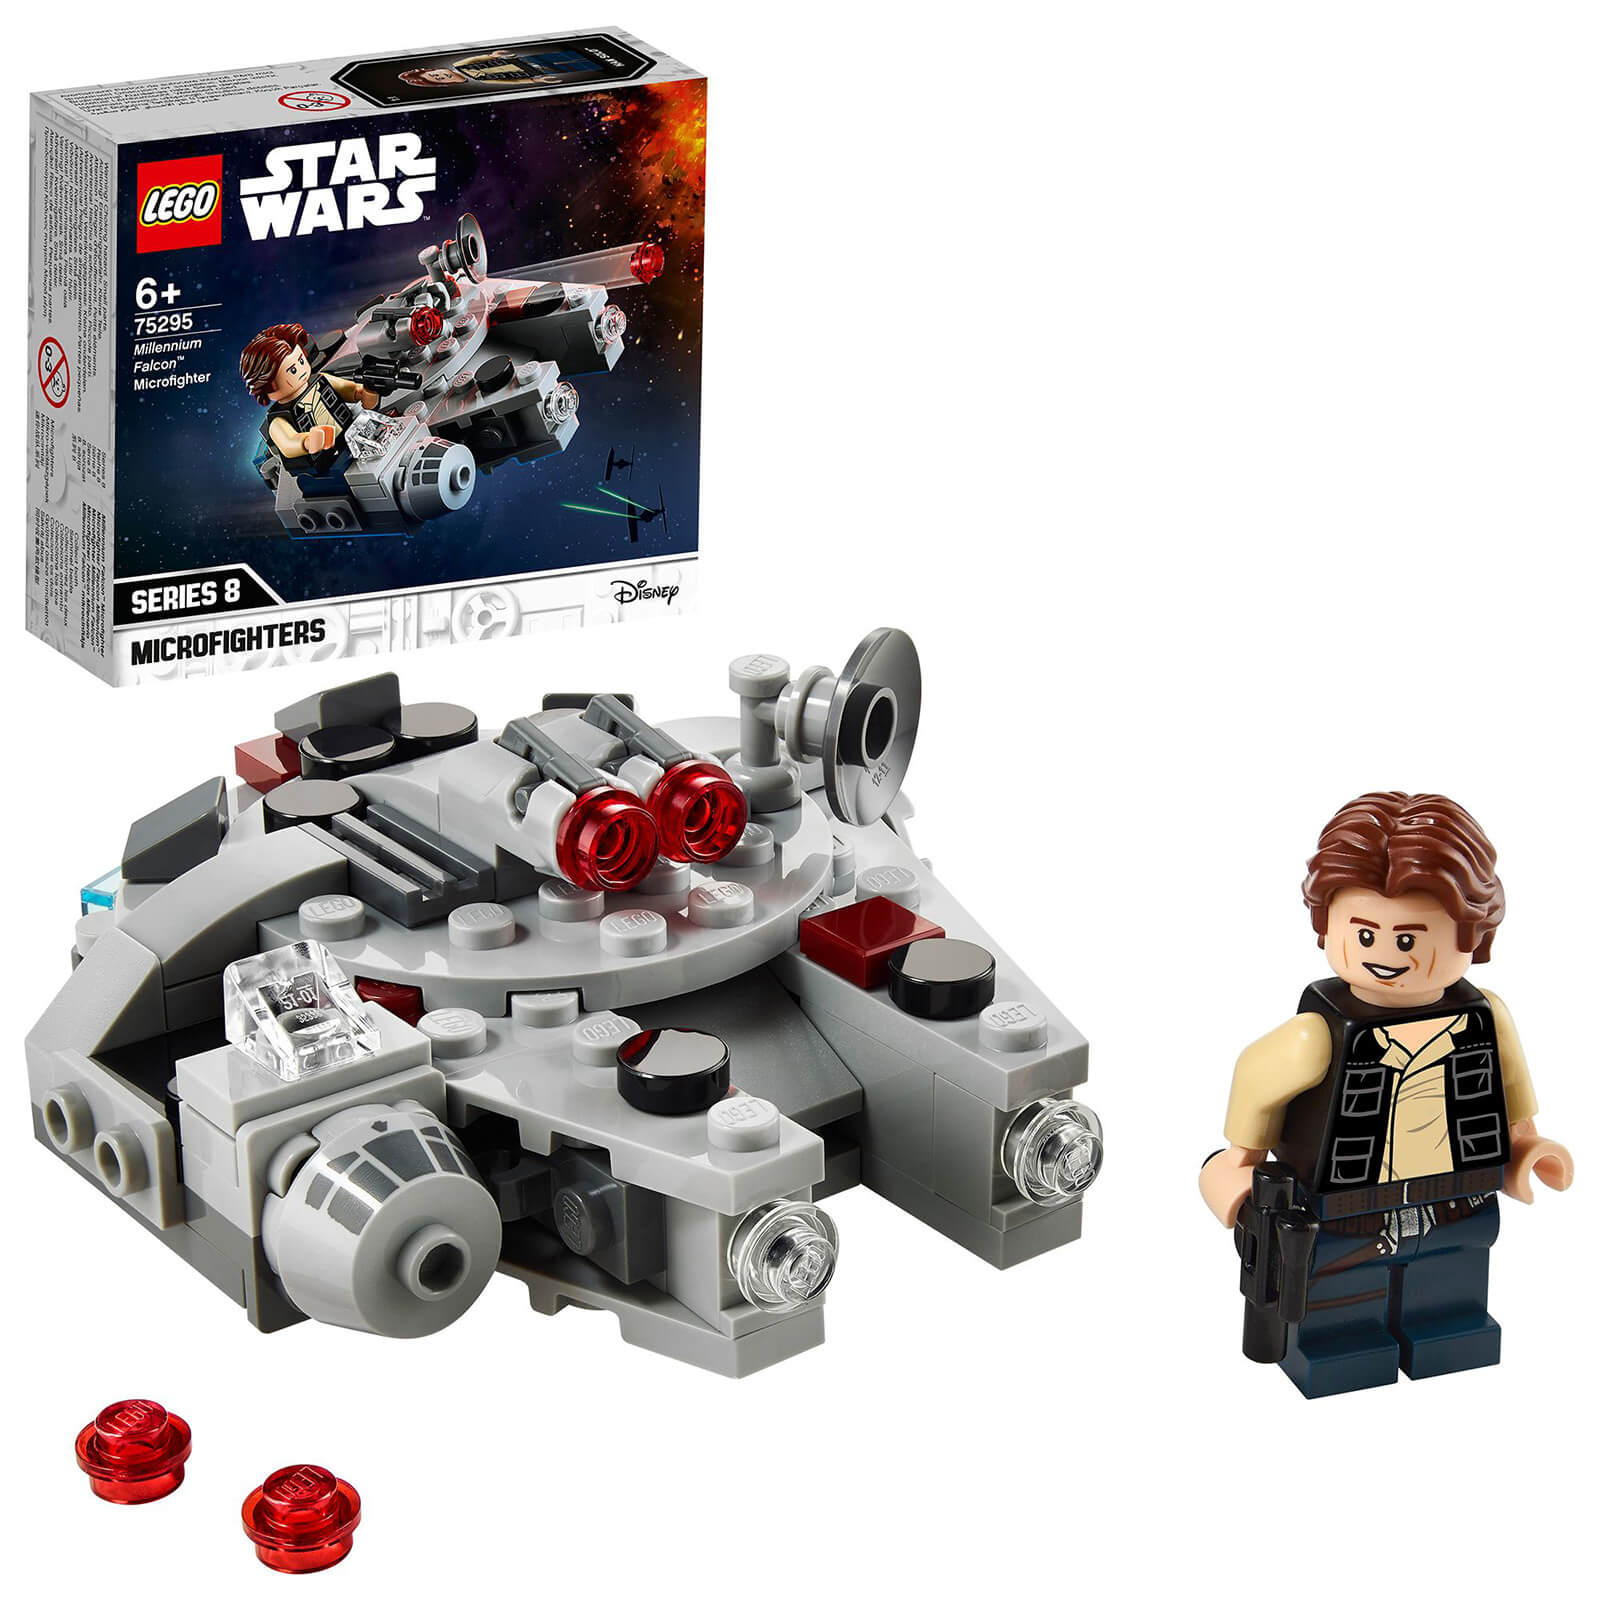 LEGO Star Wars TM: Millennium Falcon Microfighter (75295)